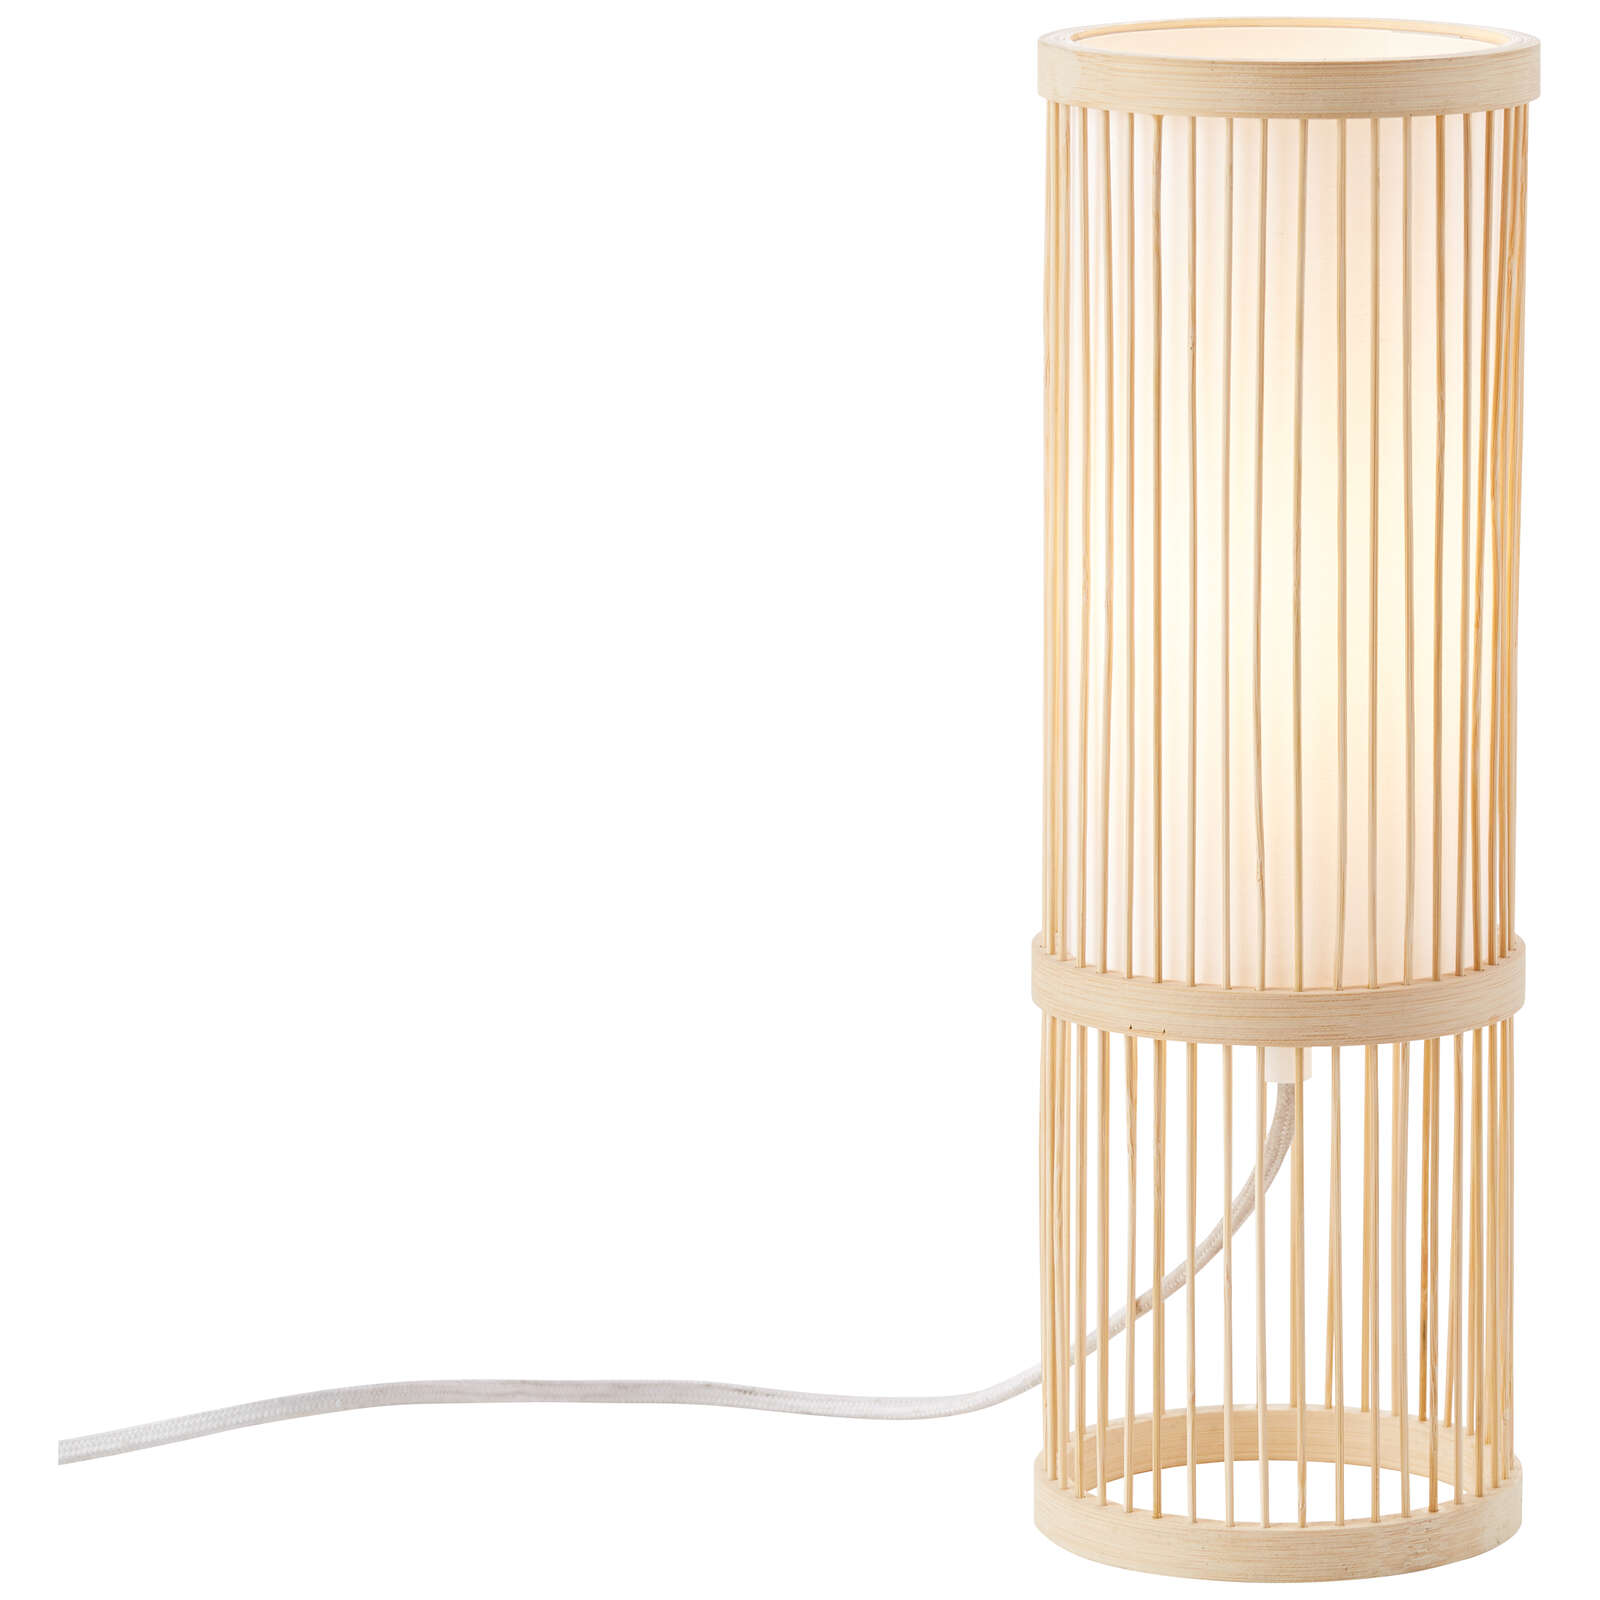             Lampada da tavolo in bambù - Luise 2 - Marrone
        